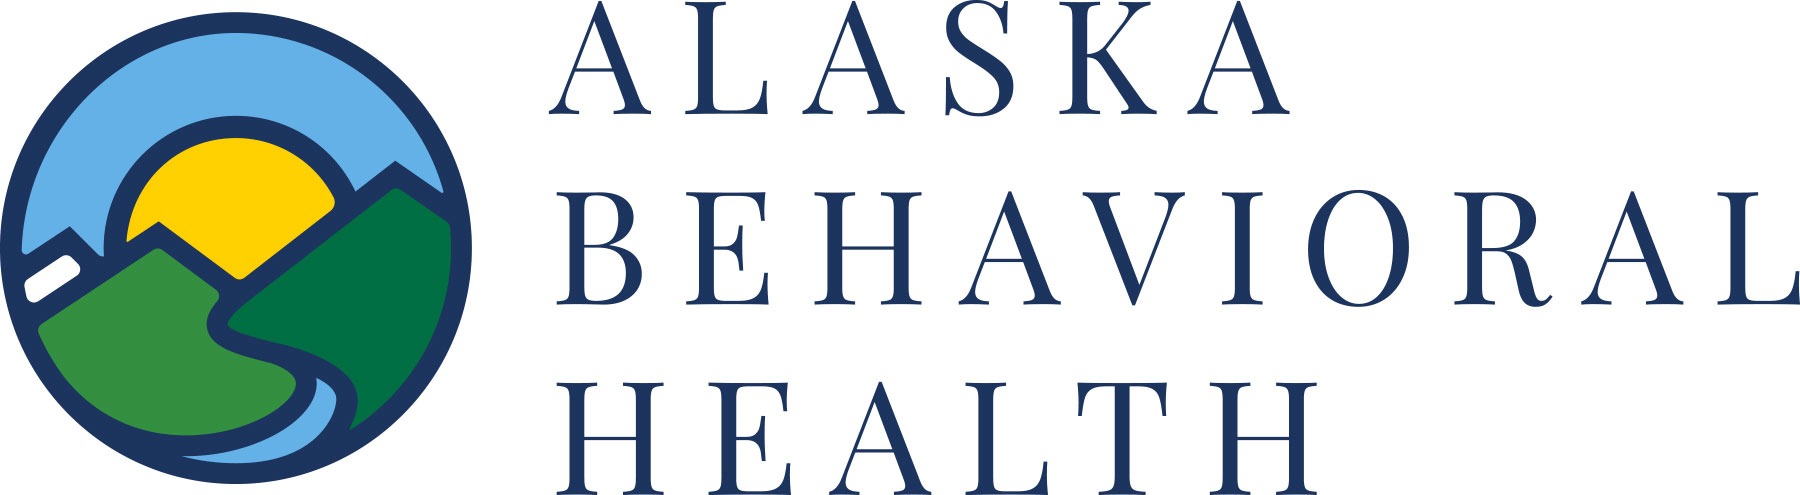 Alaska Behavioral Health logo